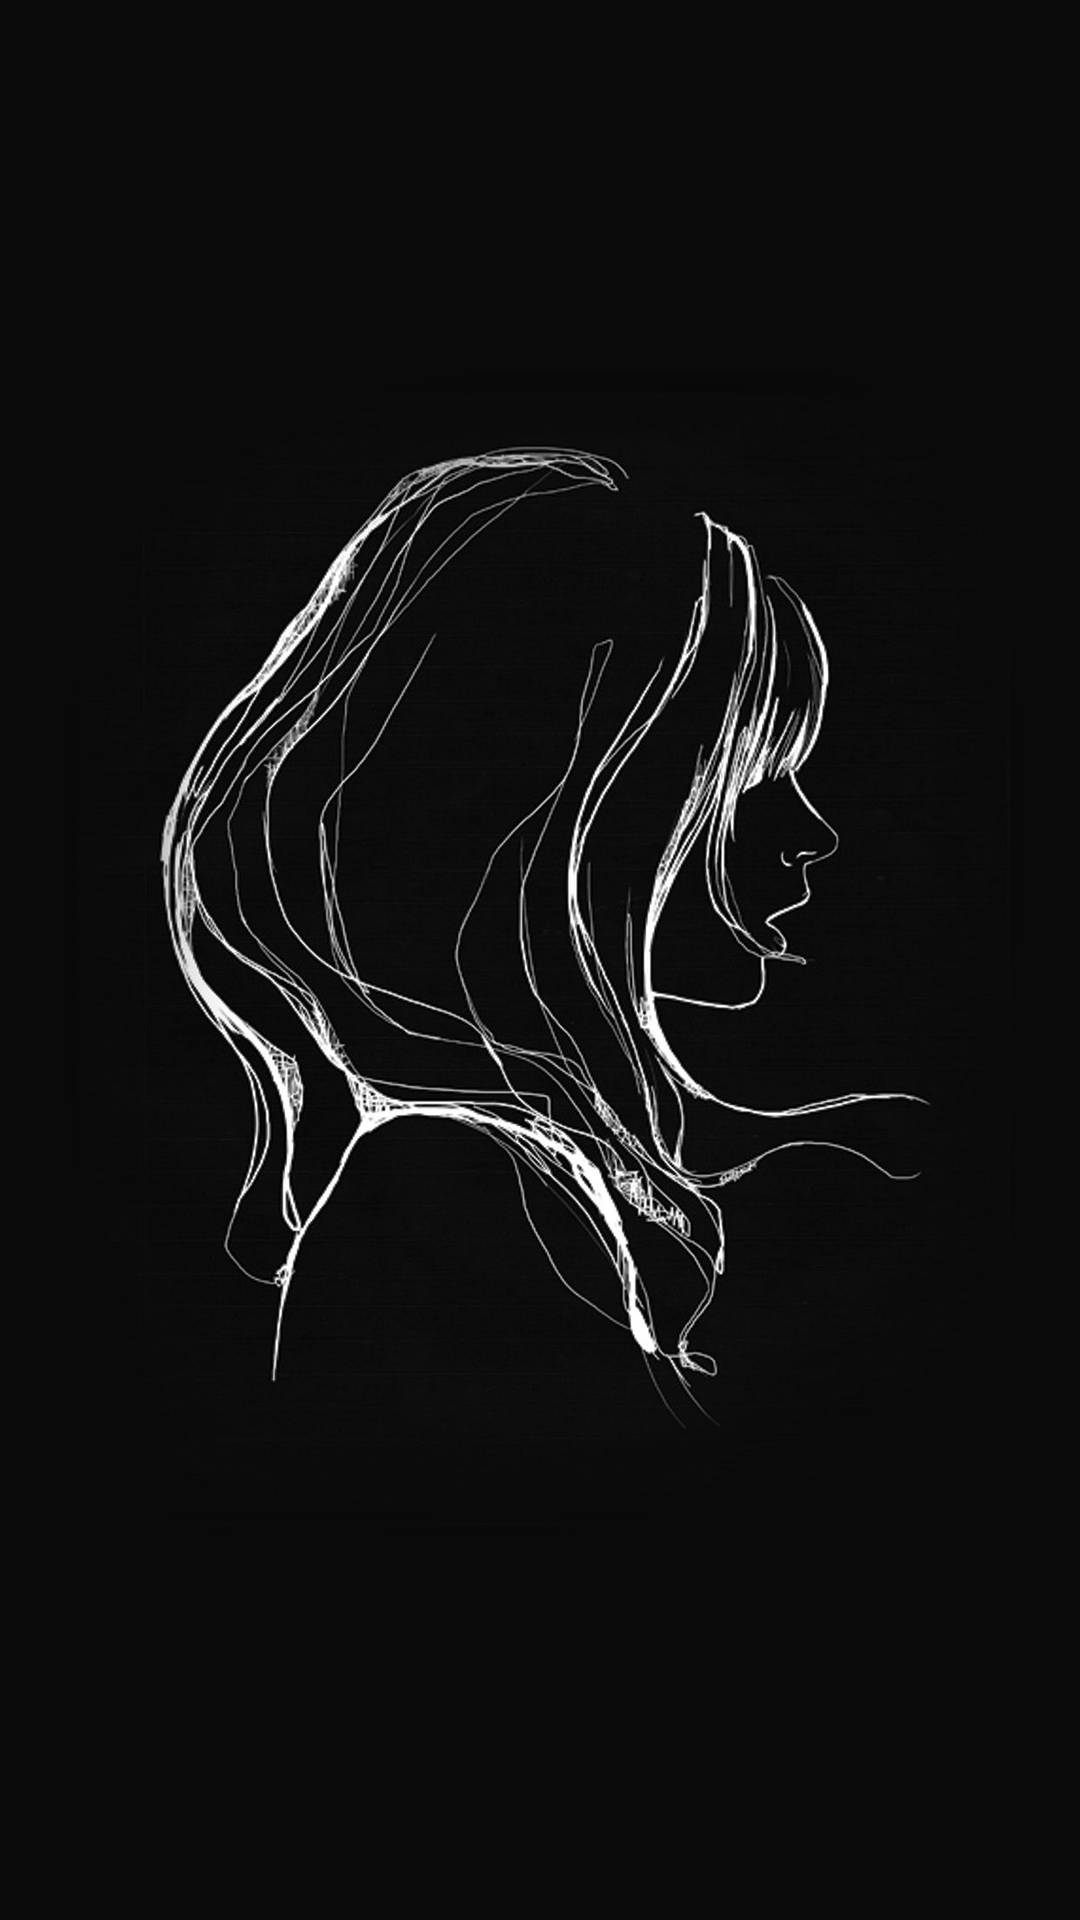 Dark Girly Woman Side Profile Sketch Wallpaper